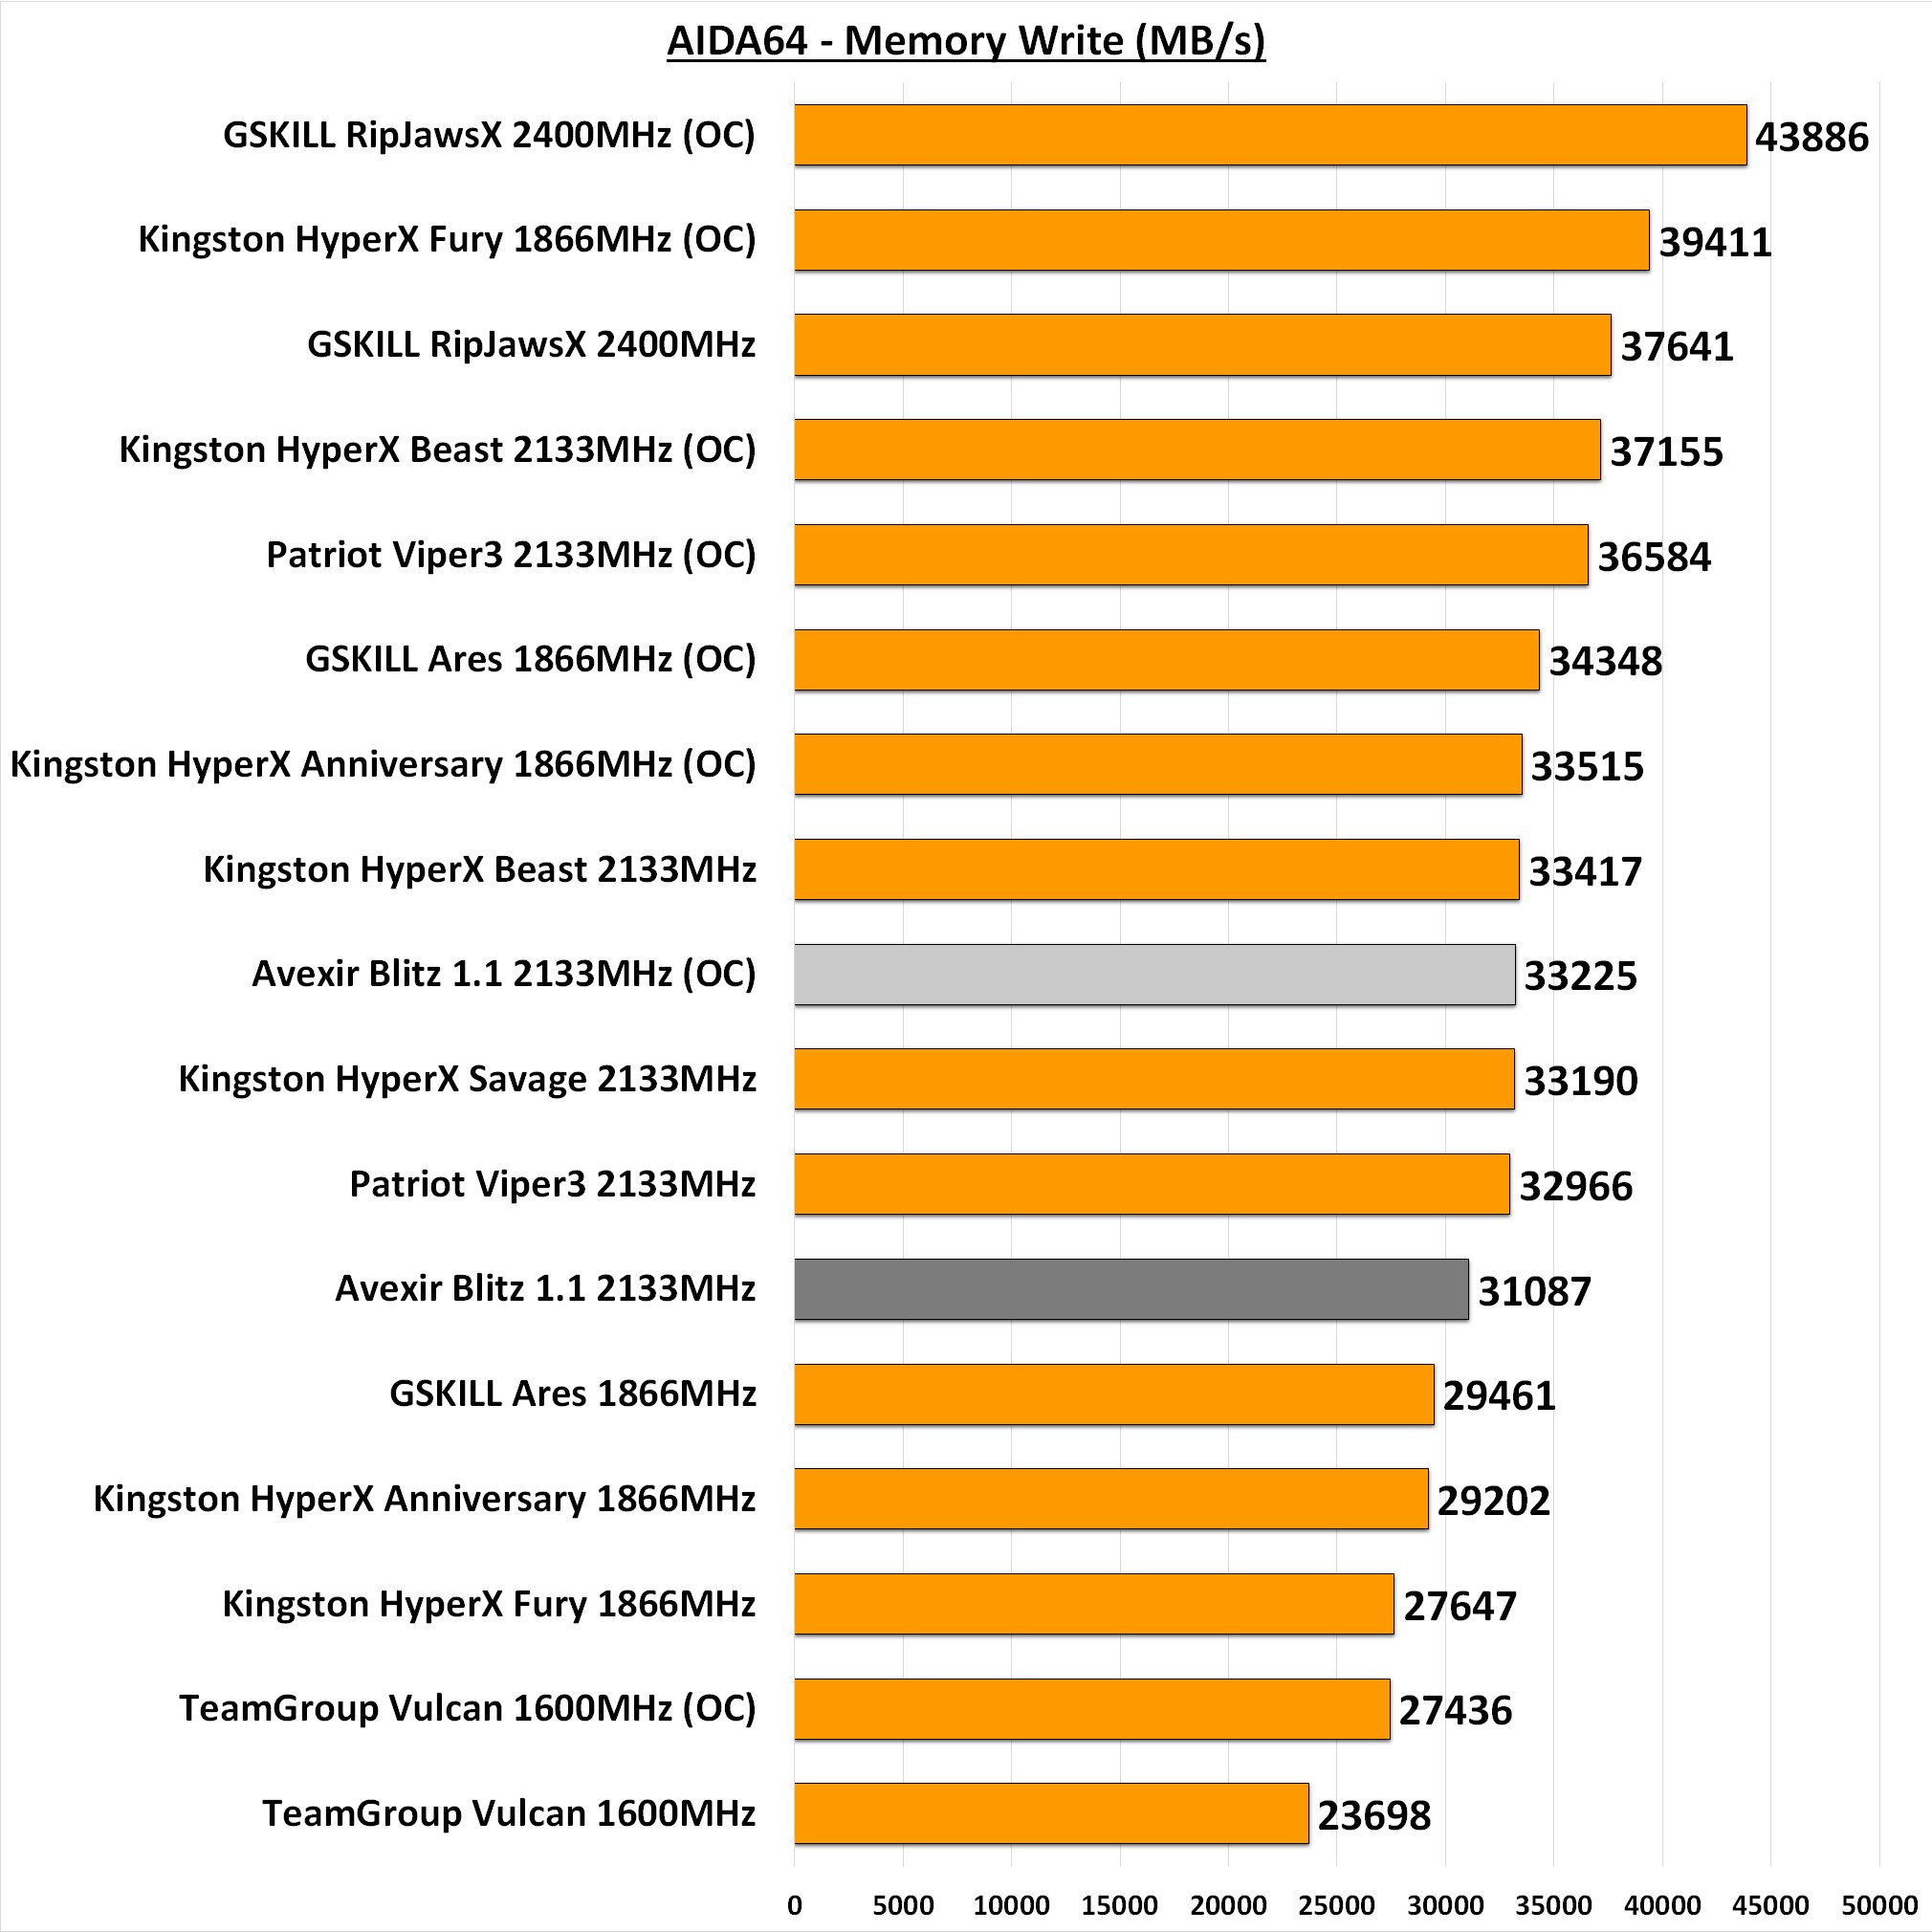 Avexir Blitz 1.1 Original 8GB 2133MHz DDR3 Memory Review 12